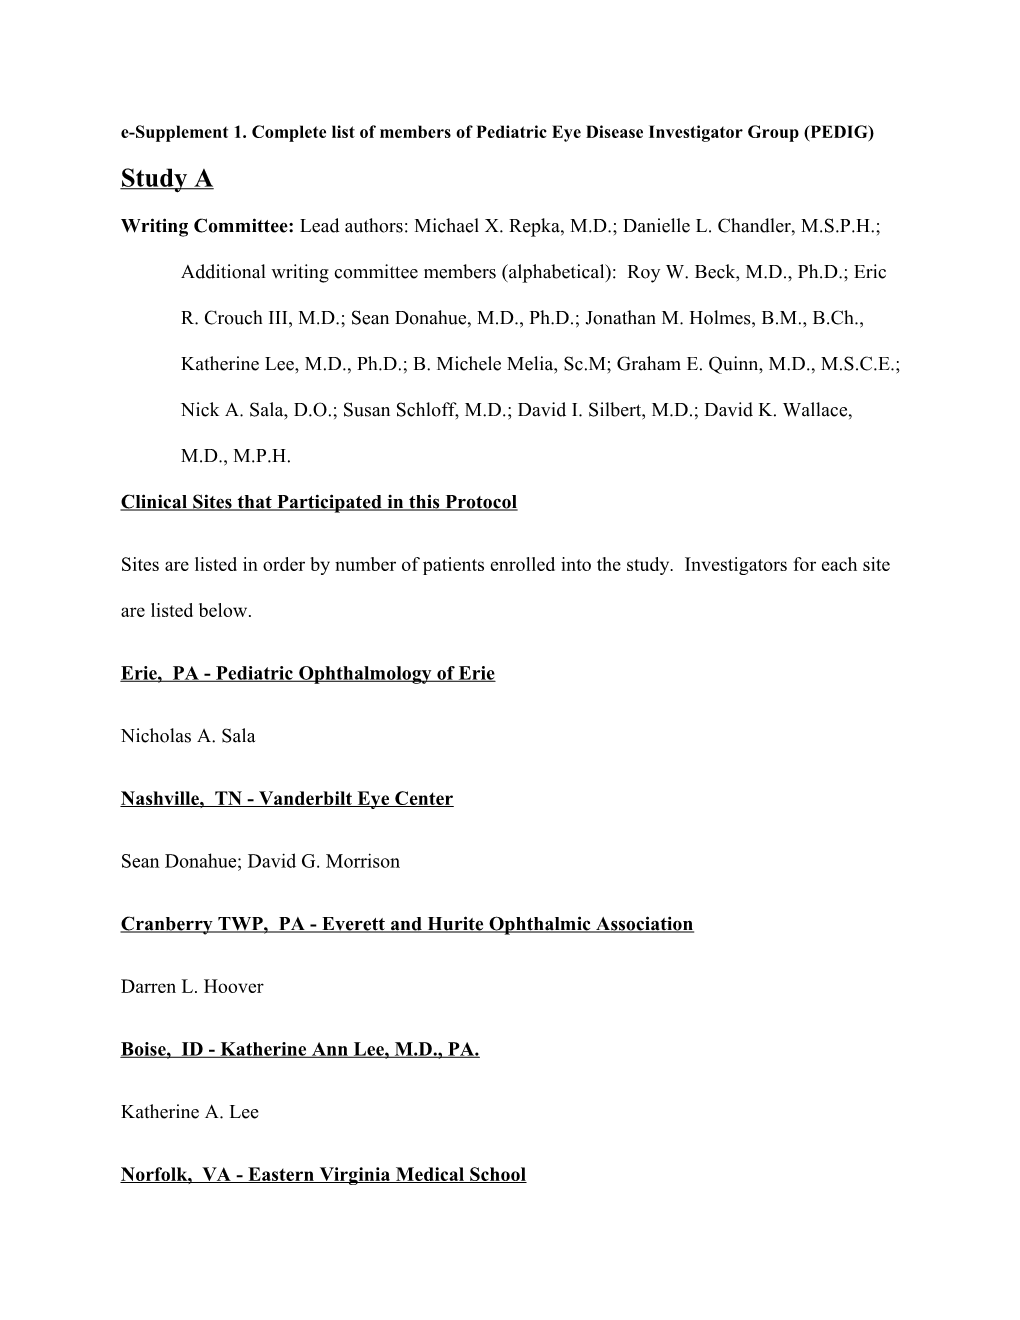 E-Supplement 1. Complete List of Members of Pediatric Eye Disease Investigator Group (PEDIG)